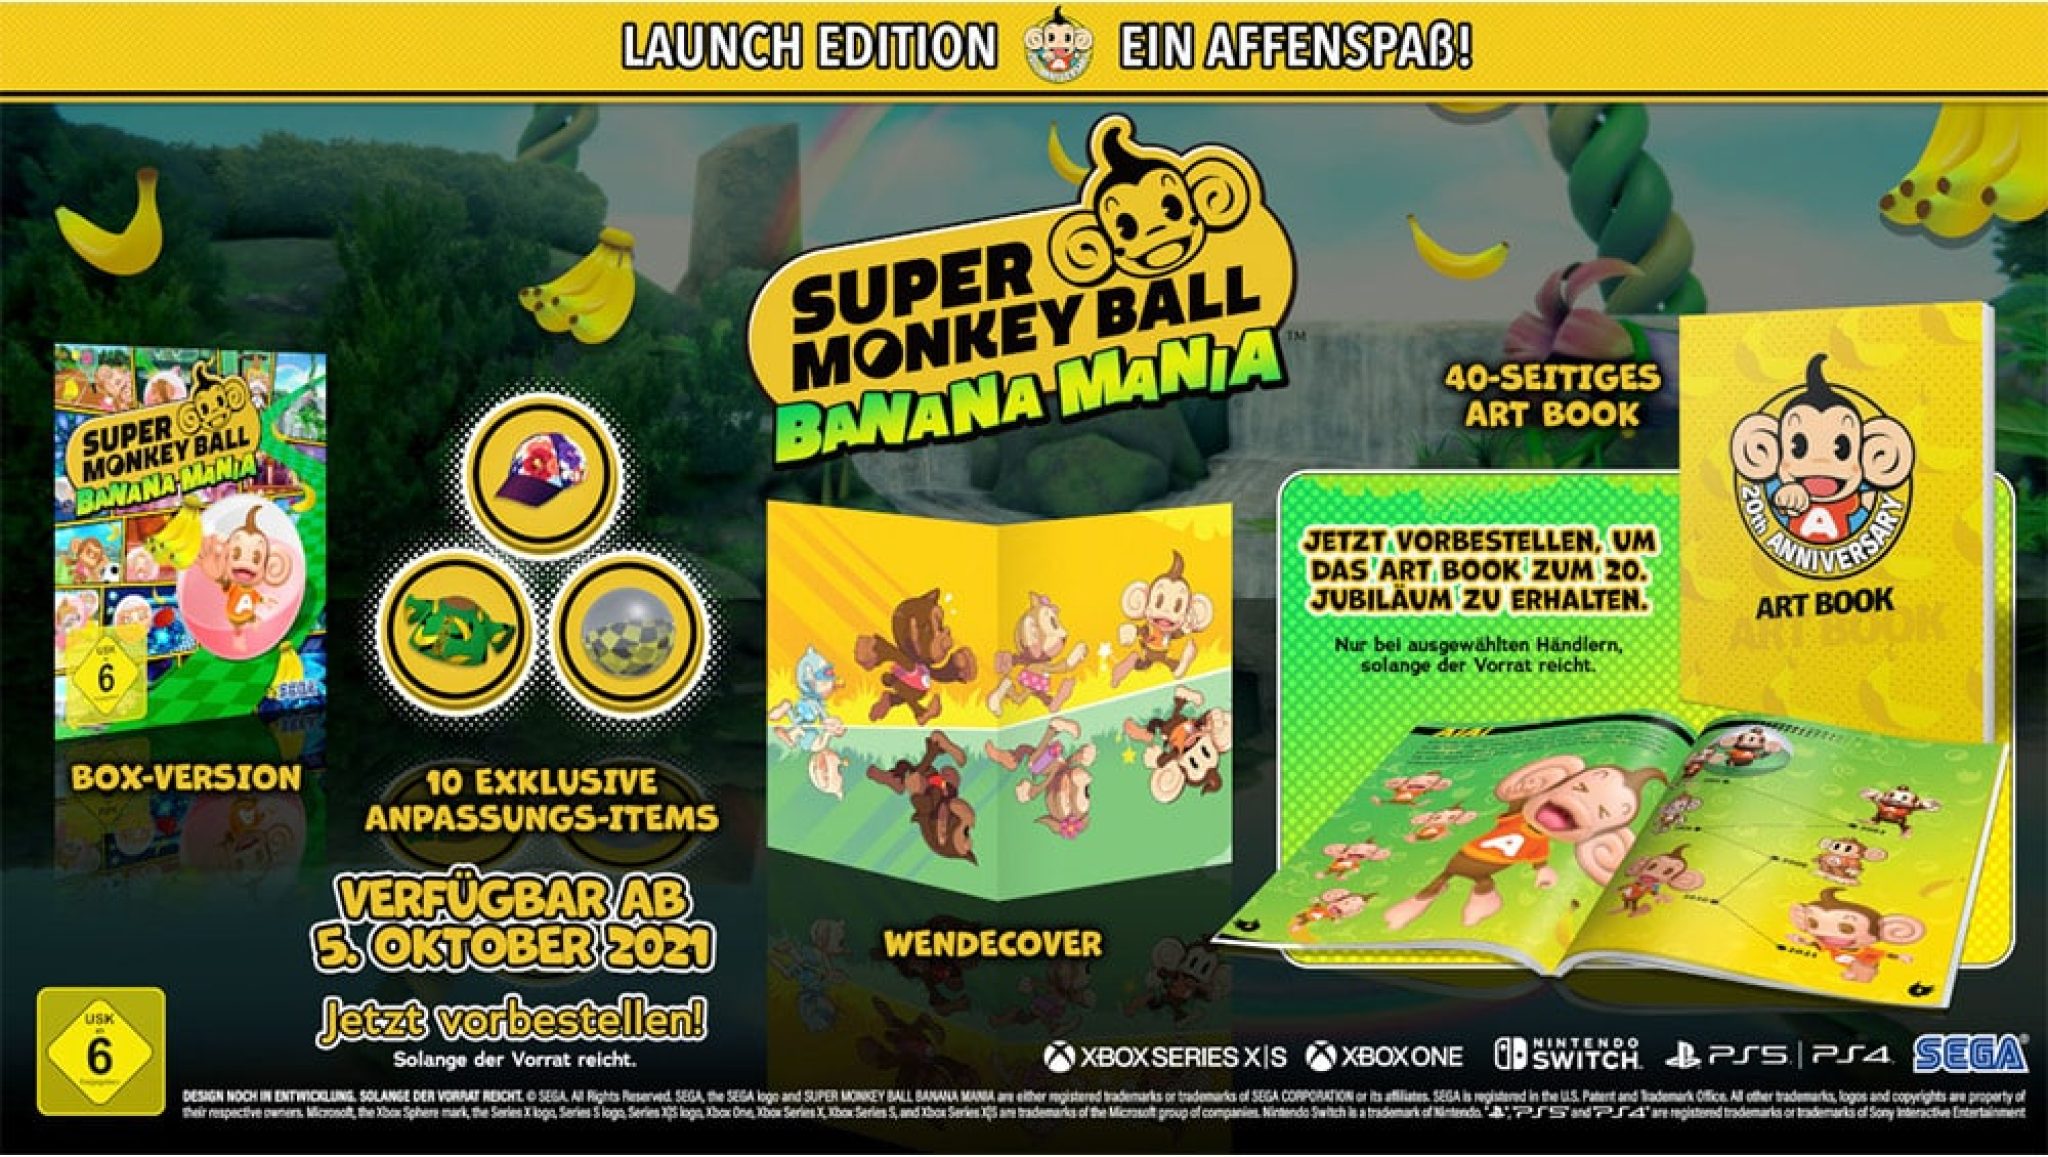 super monkey ball banana mania deluxe edition